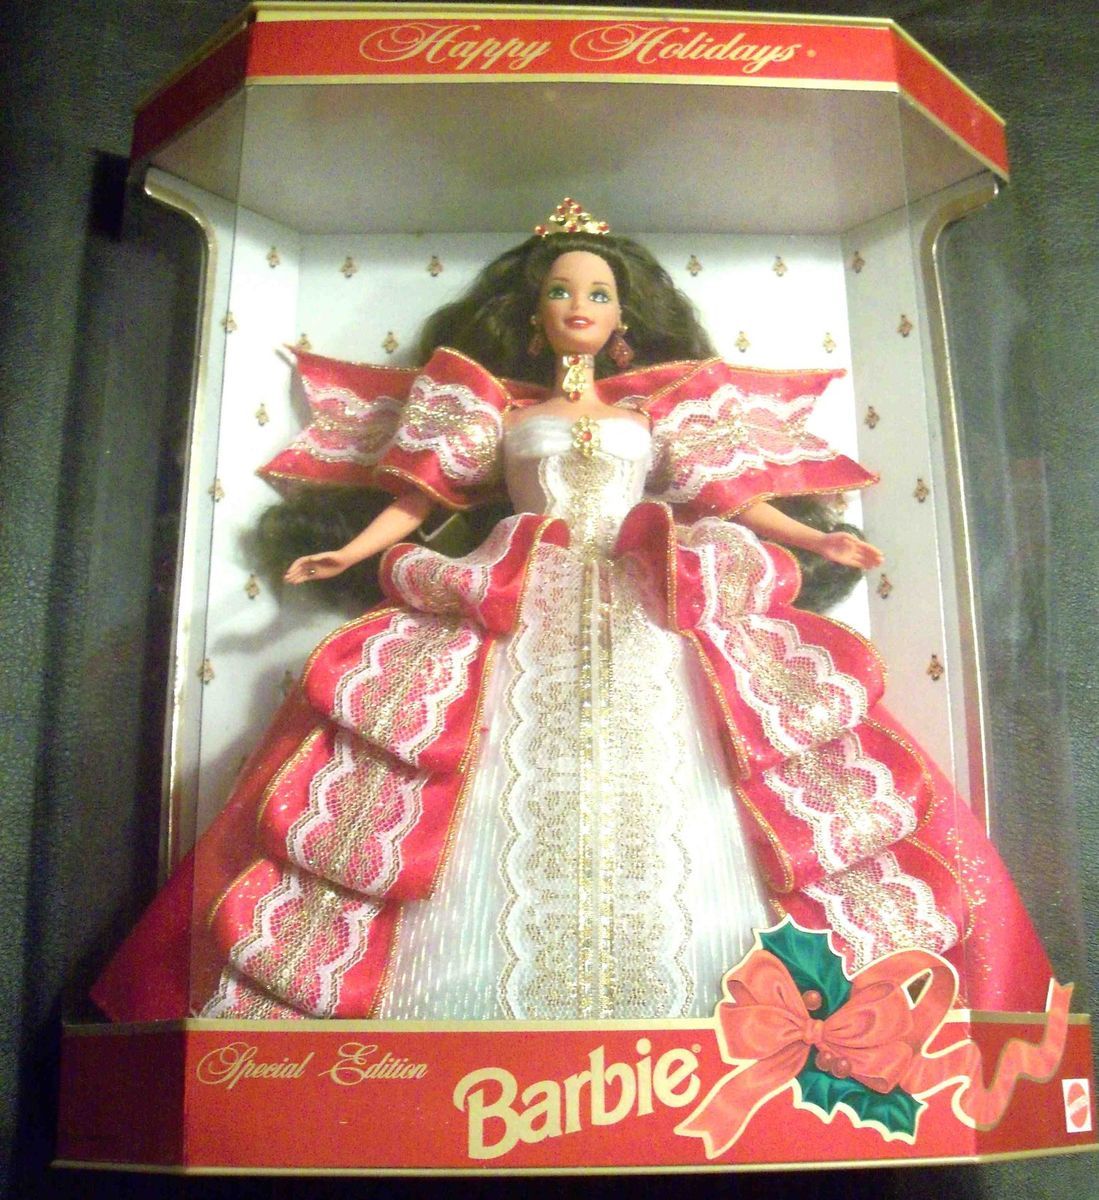   Holidays Doll   Barbie   Special Edition   Mattel   MIB   Christmas